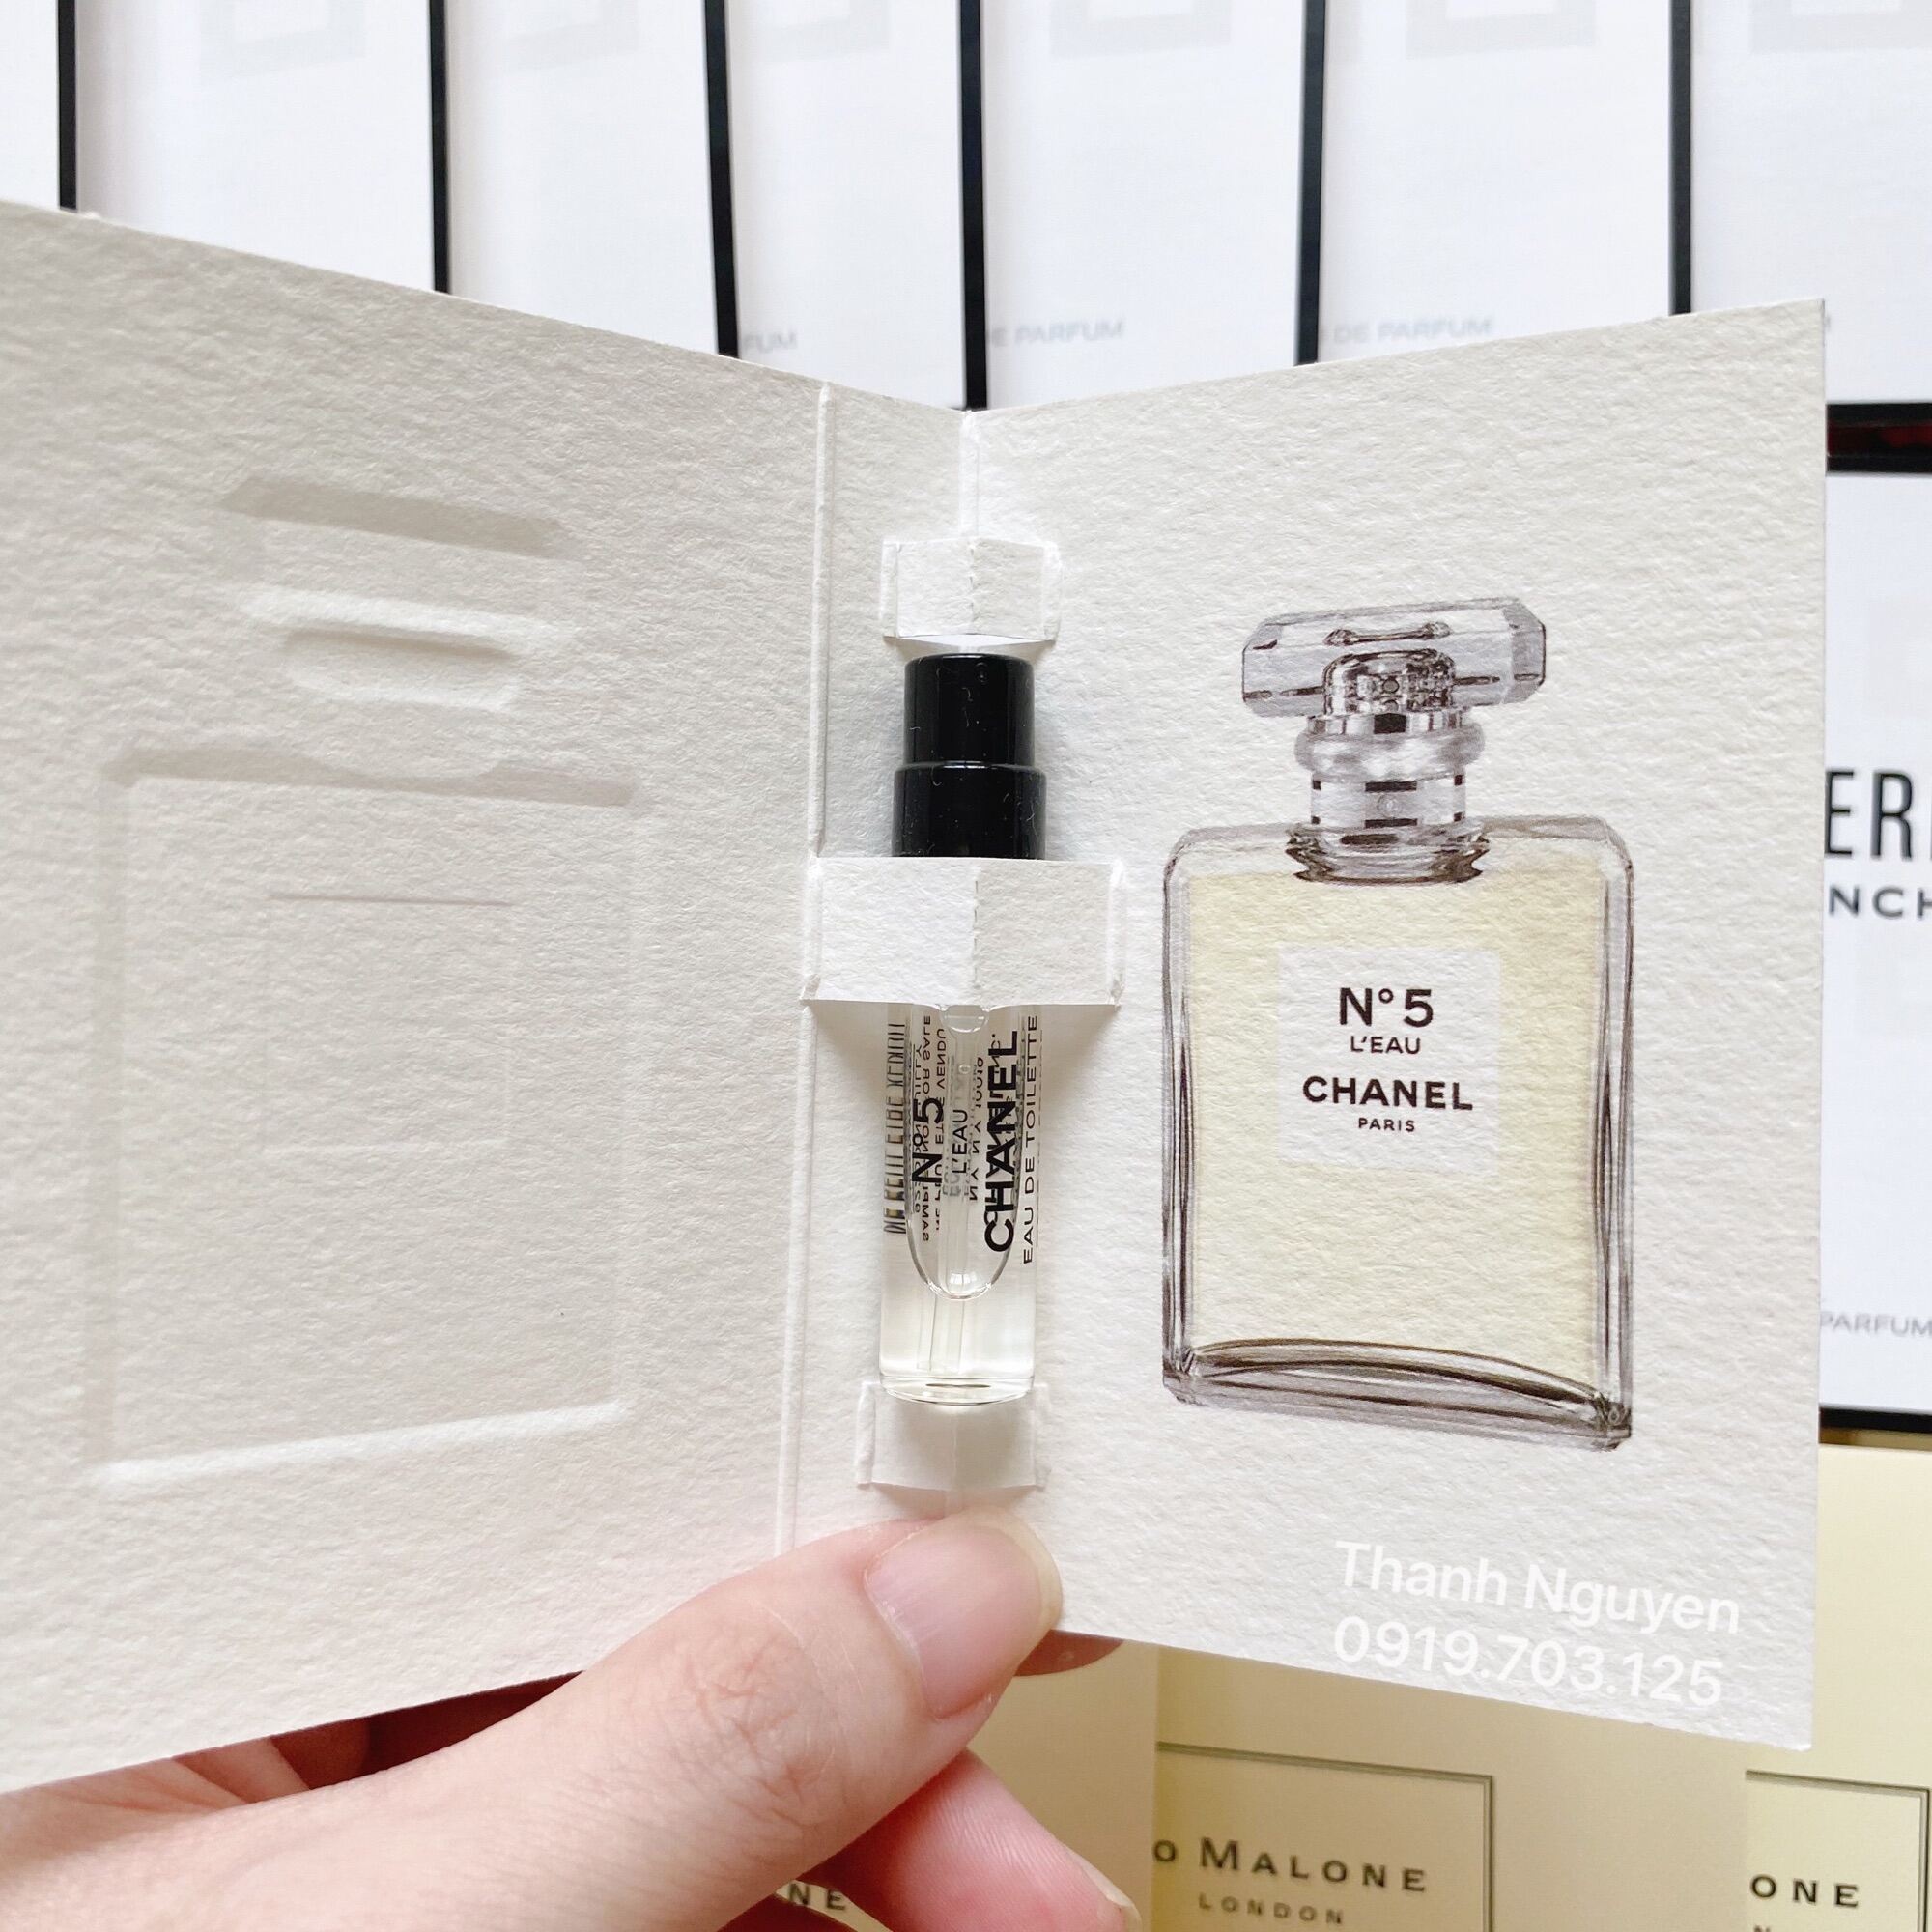 Vial nước hoa Chanel Leau No5 gift Sephora. nhập khẩu